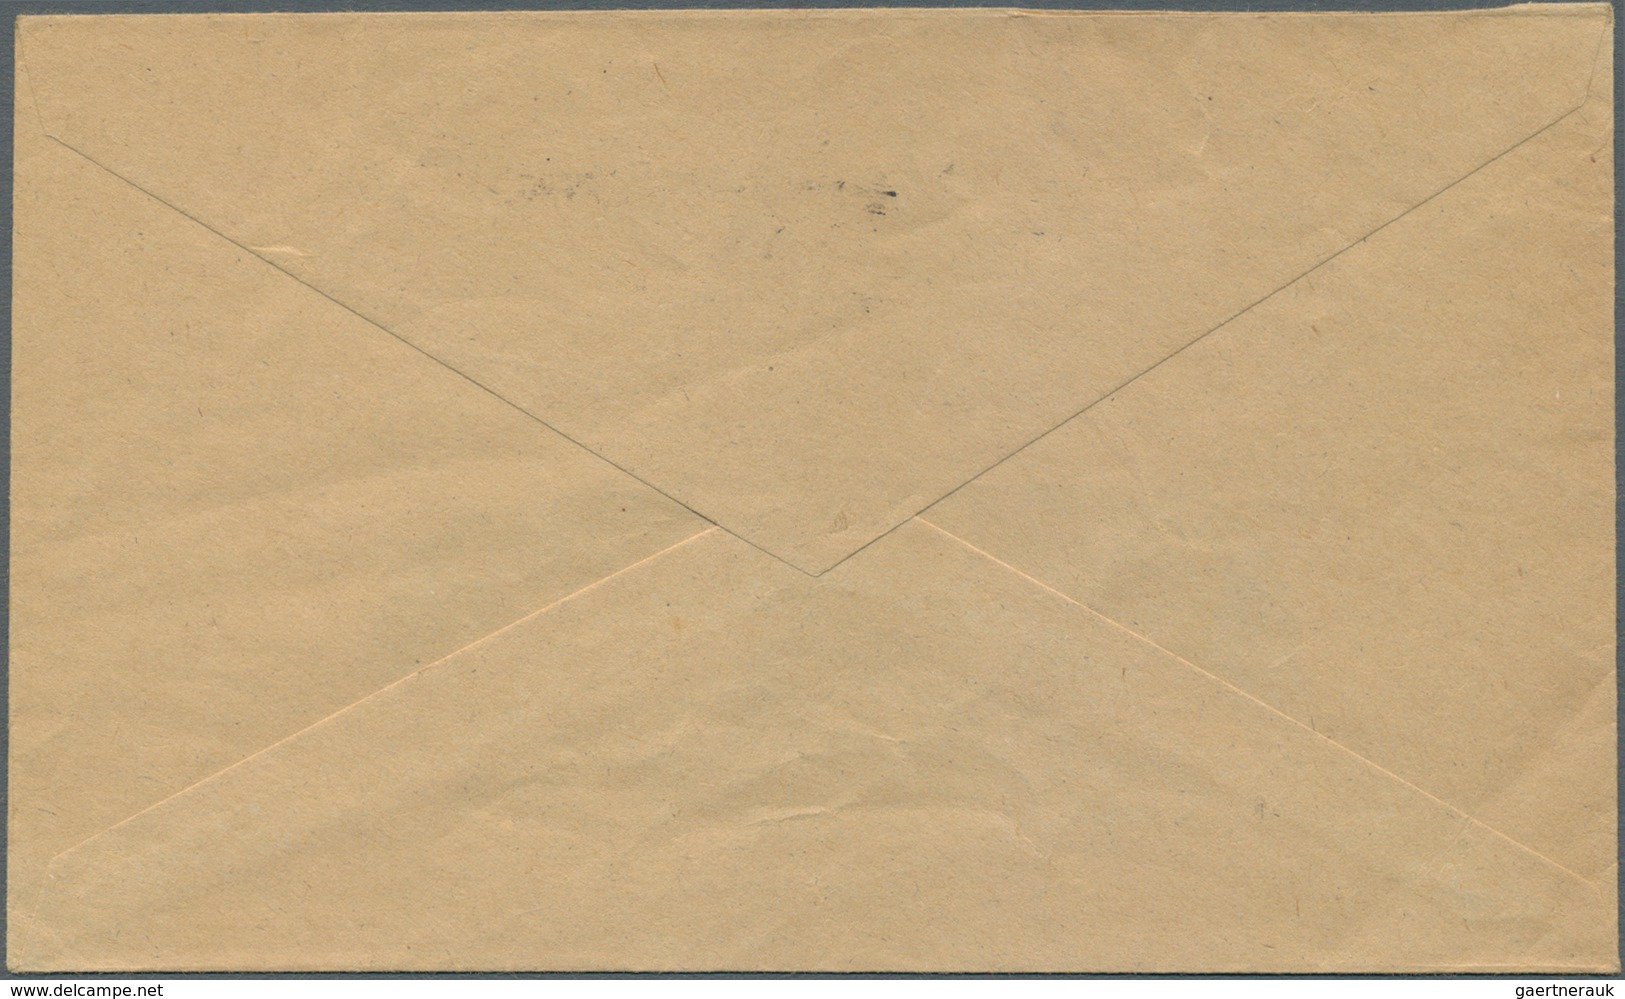 14547 Irland - Ganzsachen: The Walpamur Co. (Ireland) Ldt., Dublin: 1953, 1 1/2d. Violet Window Envelope W - Ganzsachen